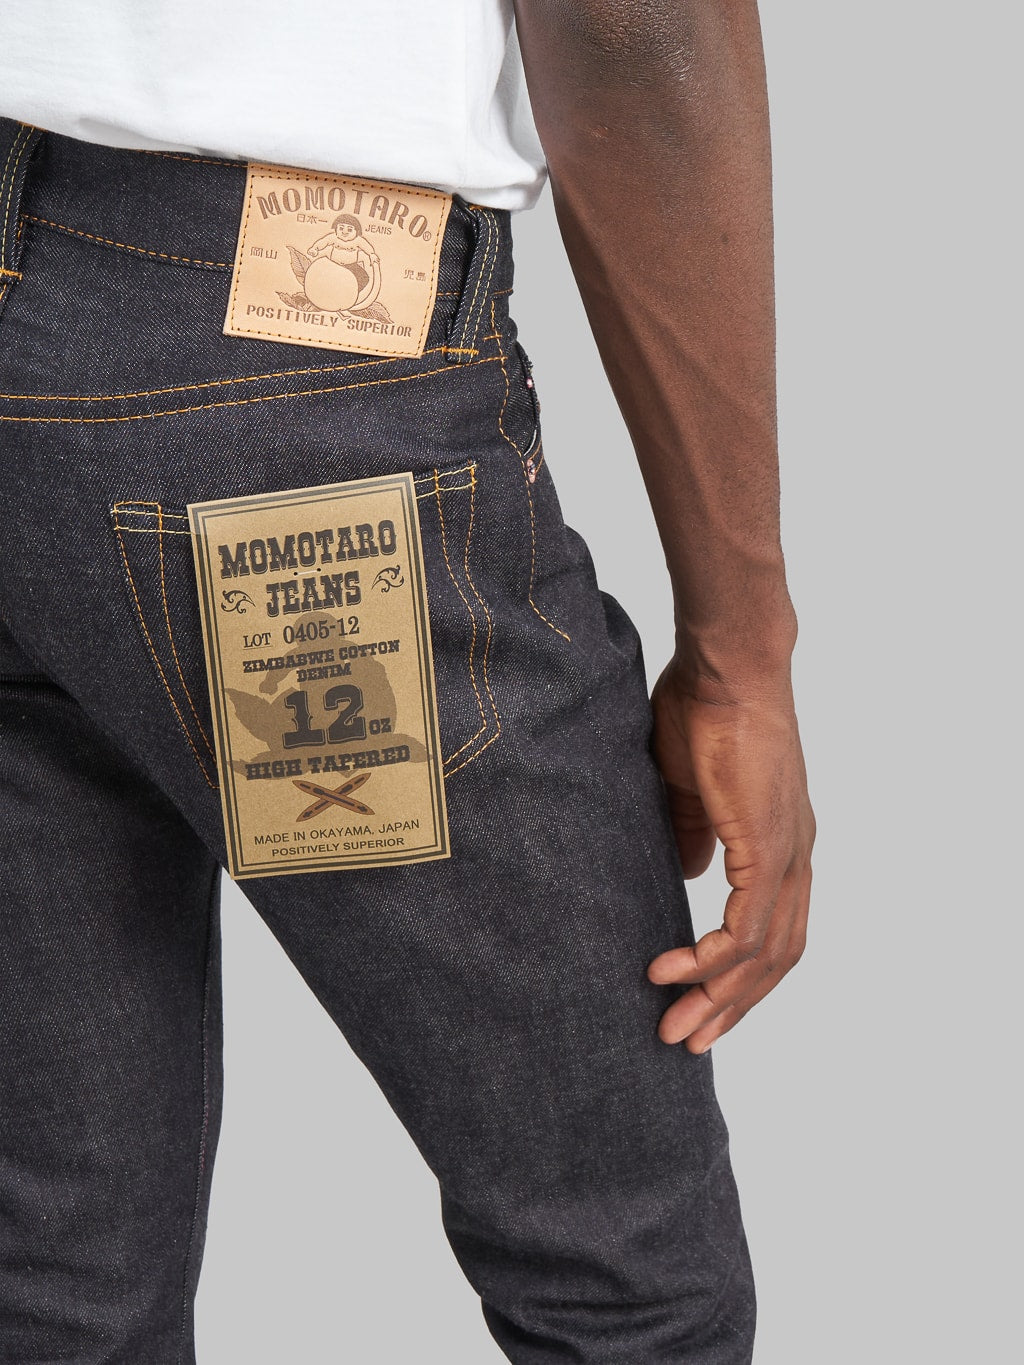 Momotaro 0405 12oz high Tapered Jeans  pocket flasher